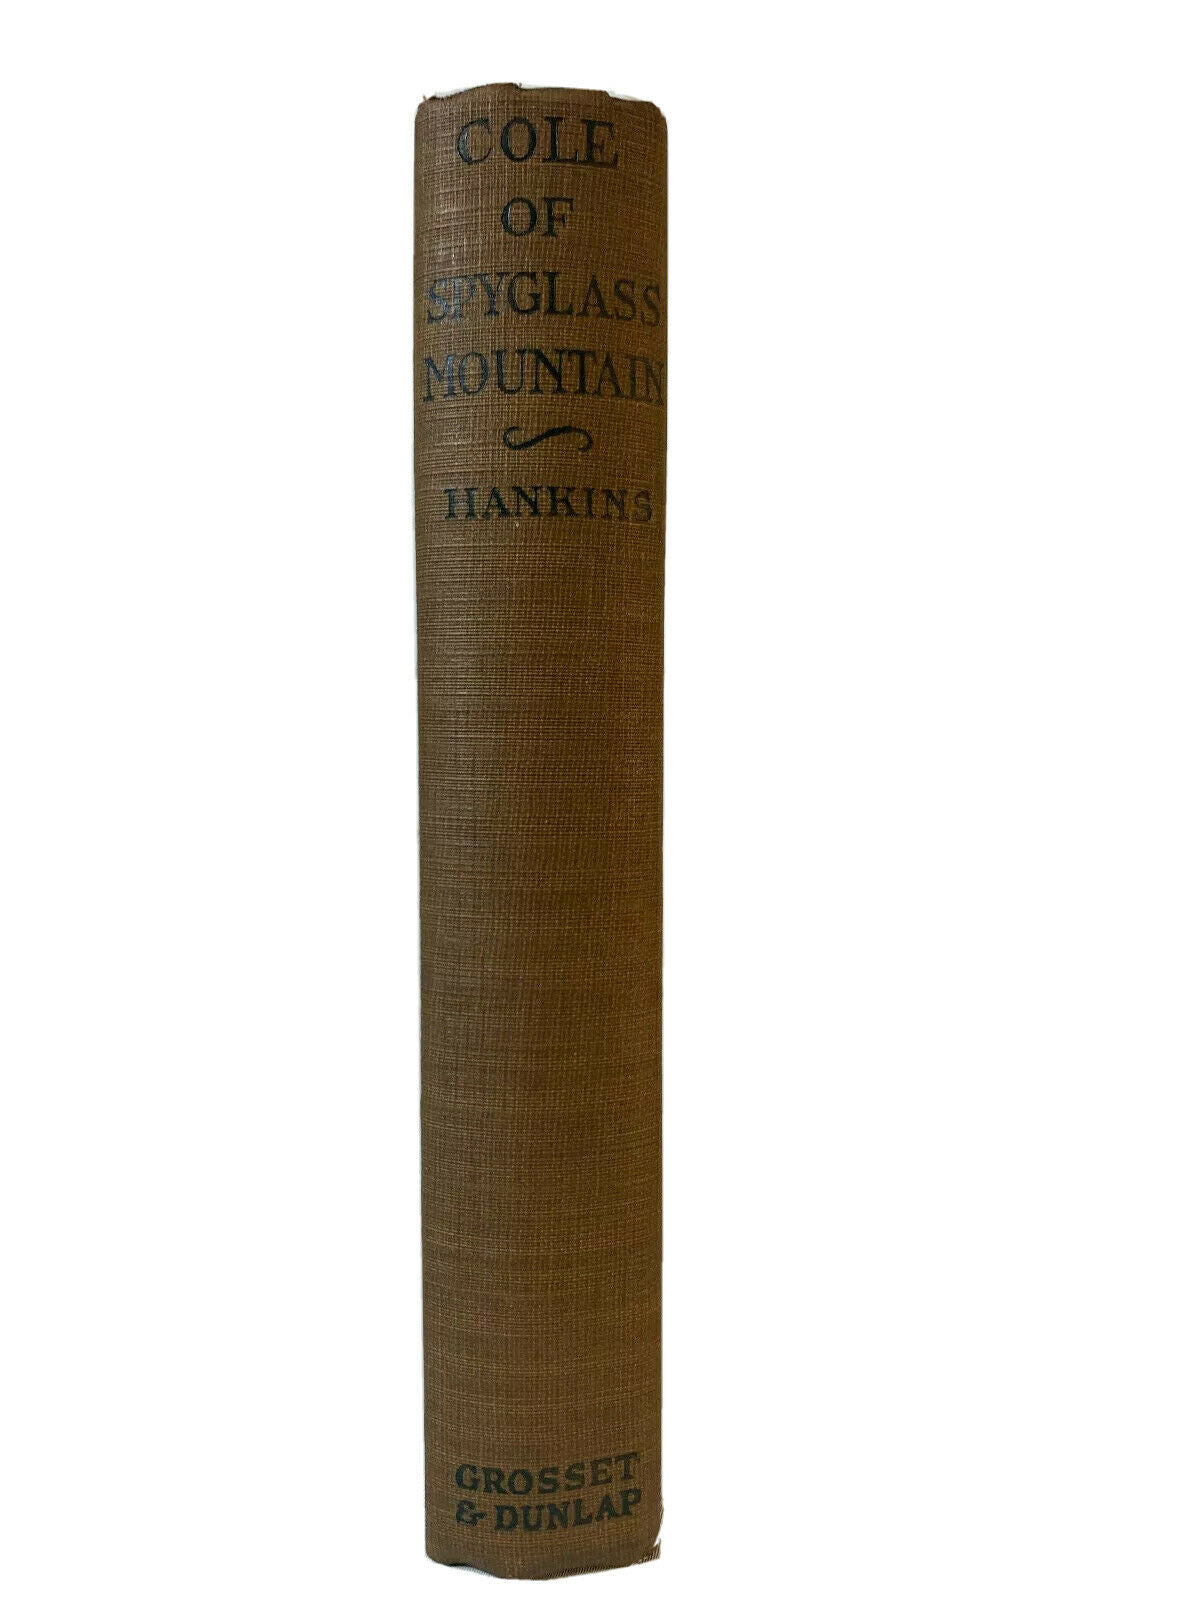 Cole of Spyglass Mountain Hankins, Arthur Preston (1923) K2